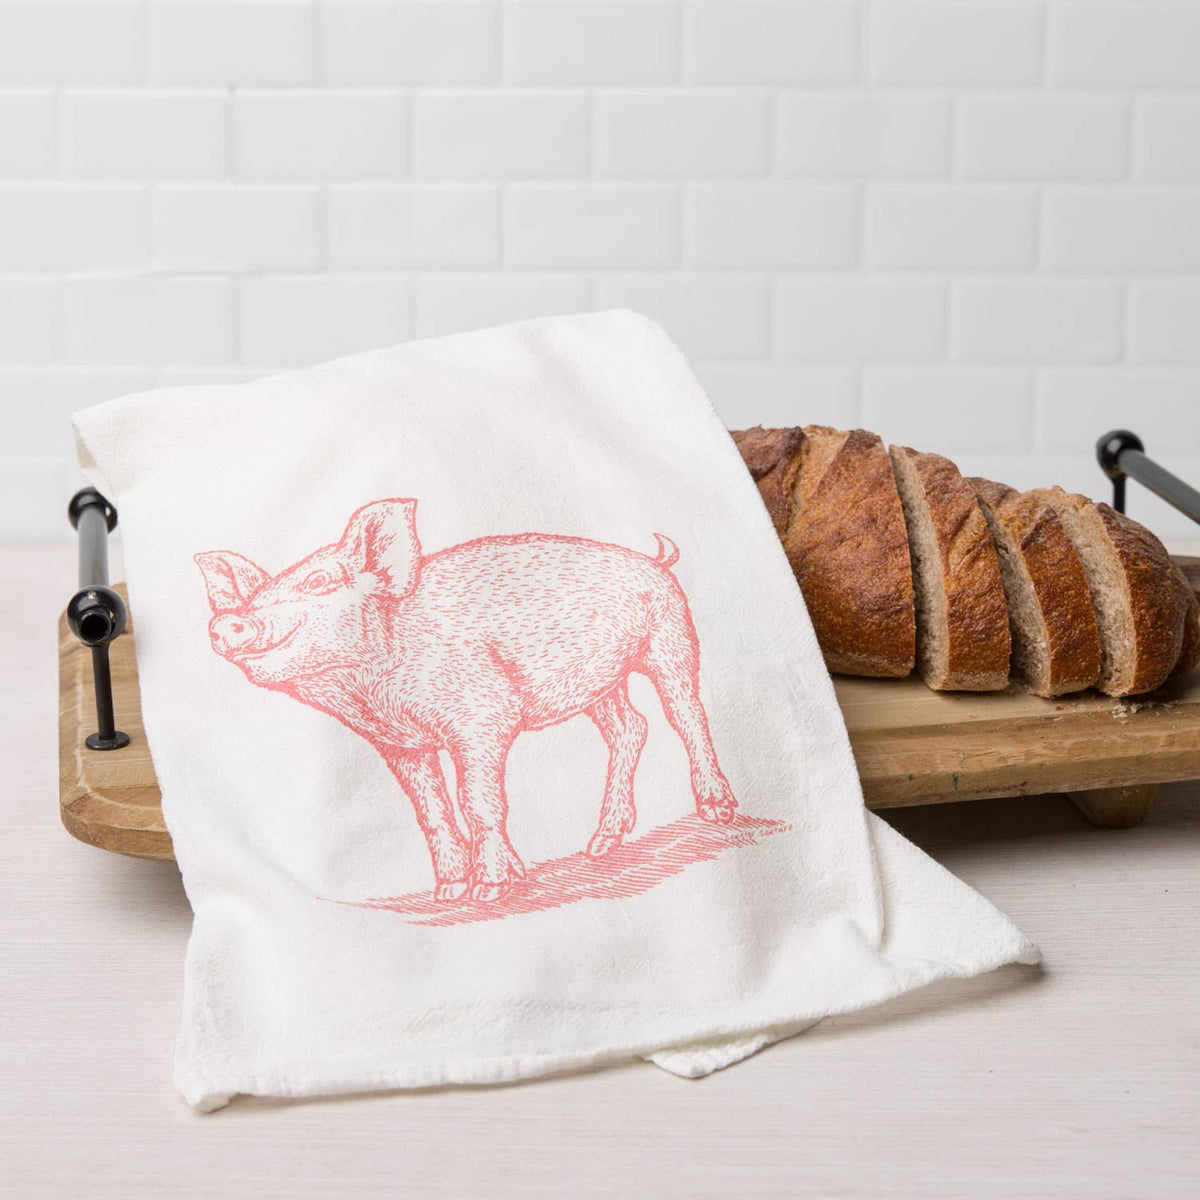 Prize Pig Flour Sack Tea Towel